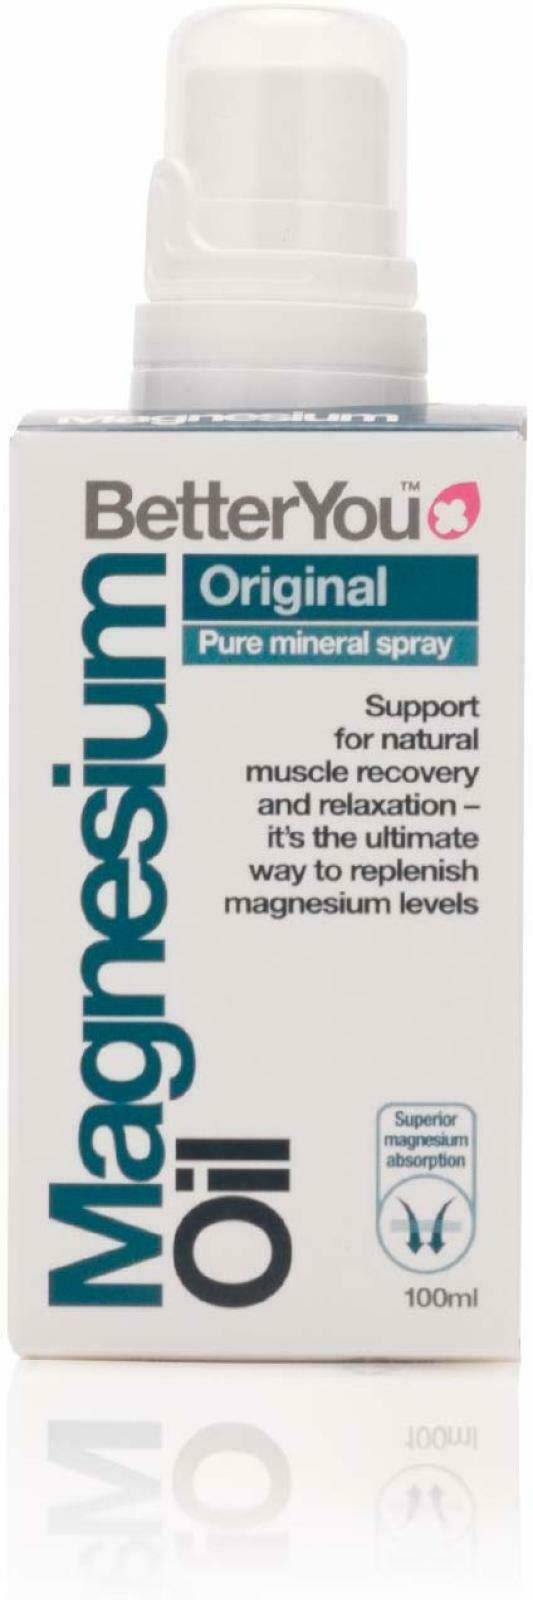 BetterYou Magnesium Oil Original Spray - 100ml